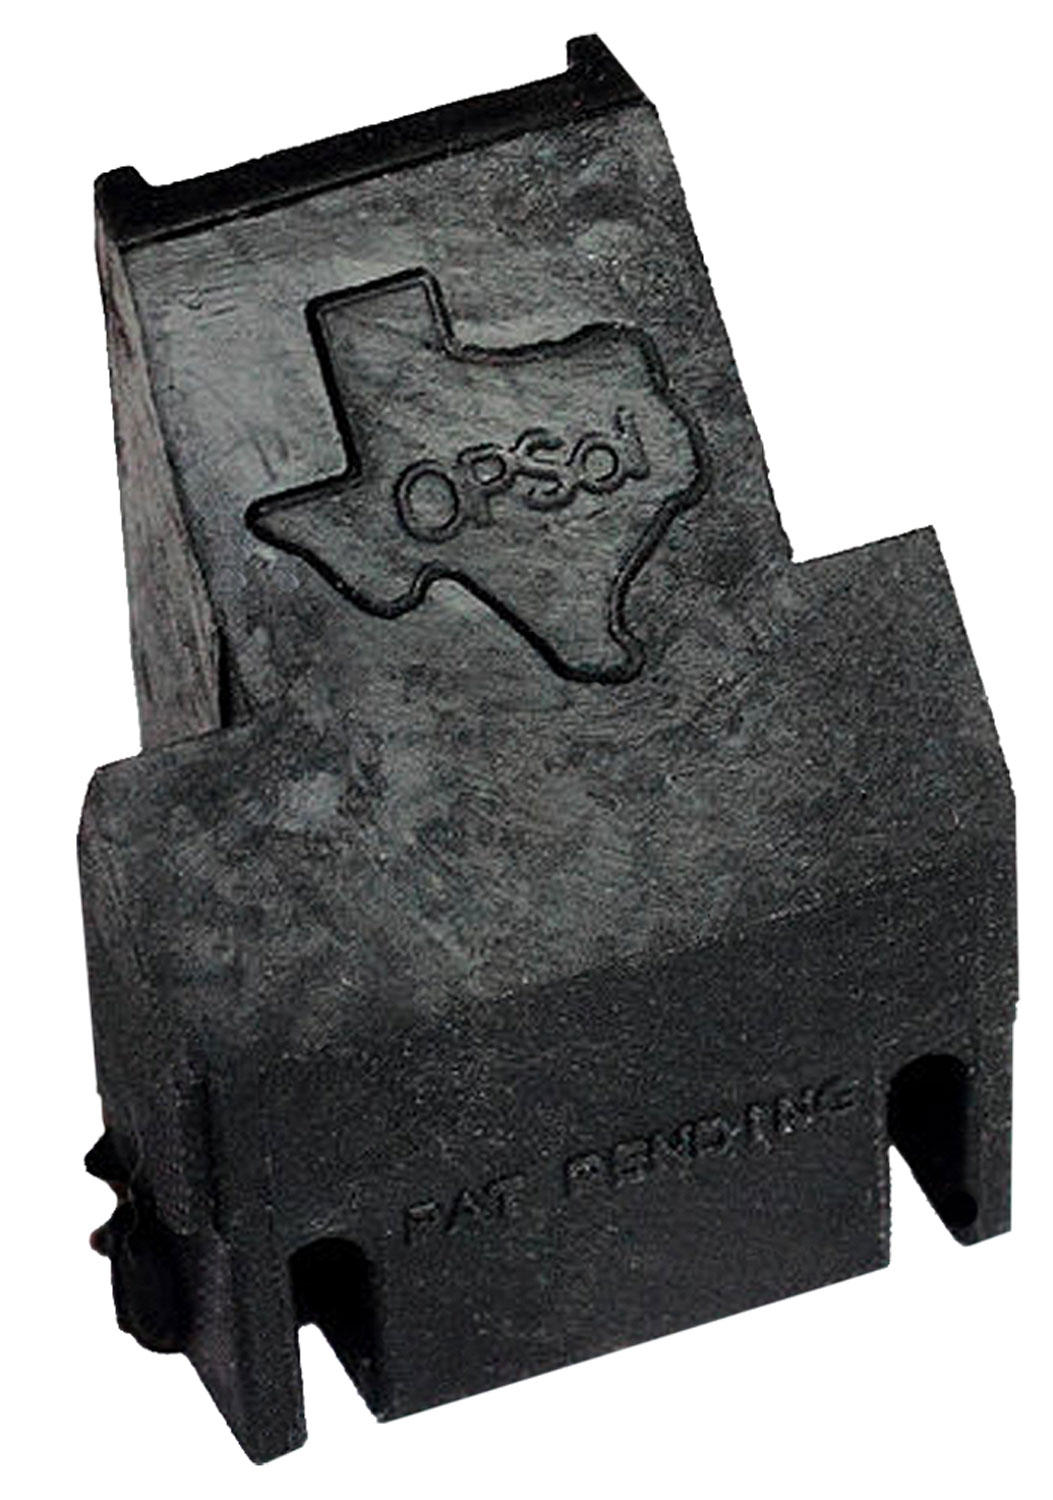 OPSol Texas MINICLIP Mini-Clip  Black Detachable 1rd 12 Gauge for Mossberg 500, 590